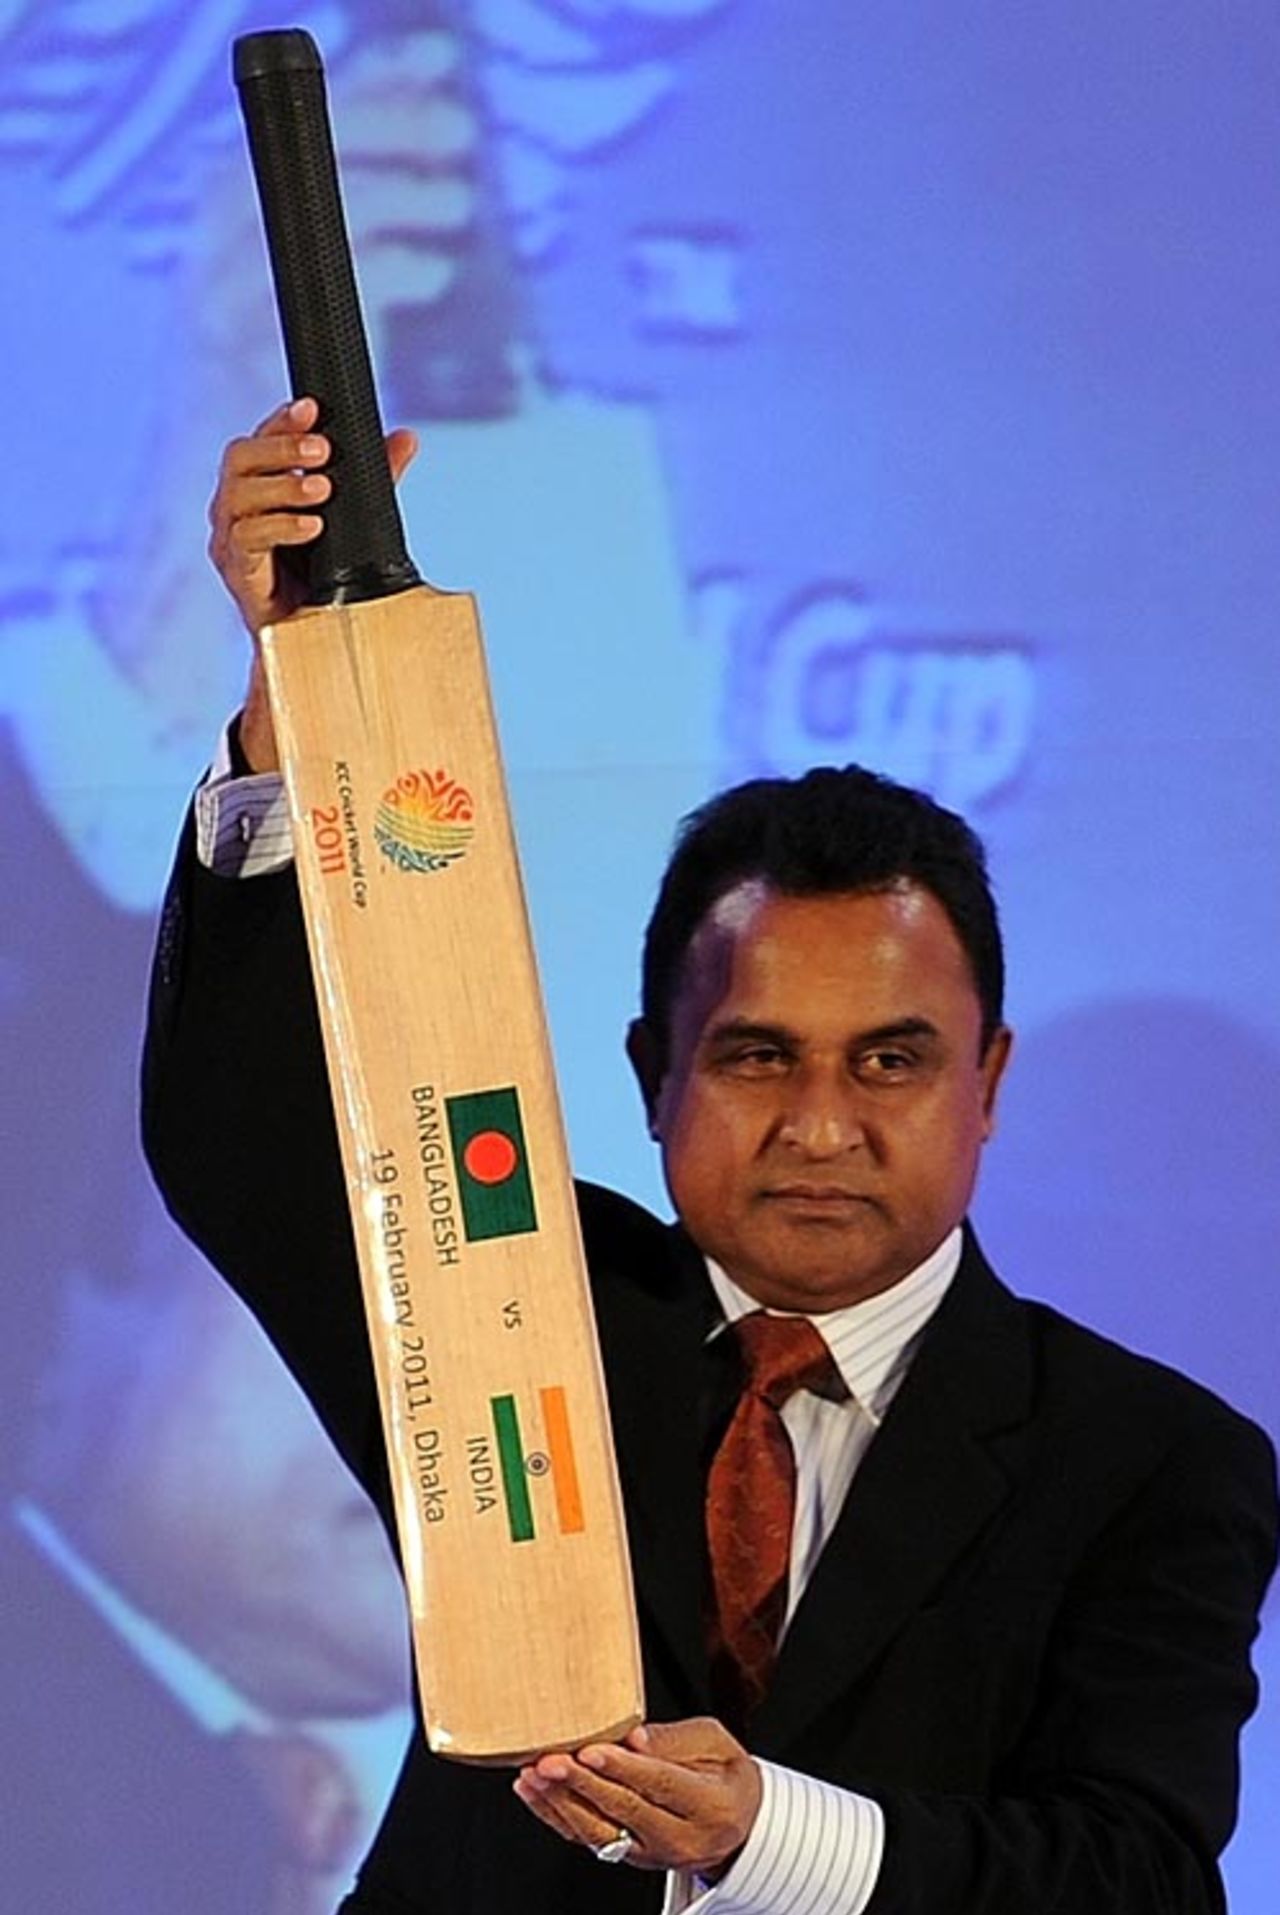 Mostafa Kamal, the Bangladesh Cricket Board, president unveils the first match of the 2011 World Cup, Mumbai, November 9, 2009